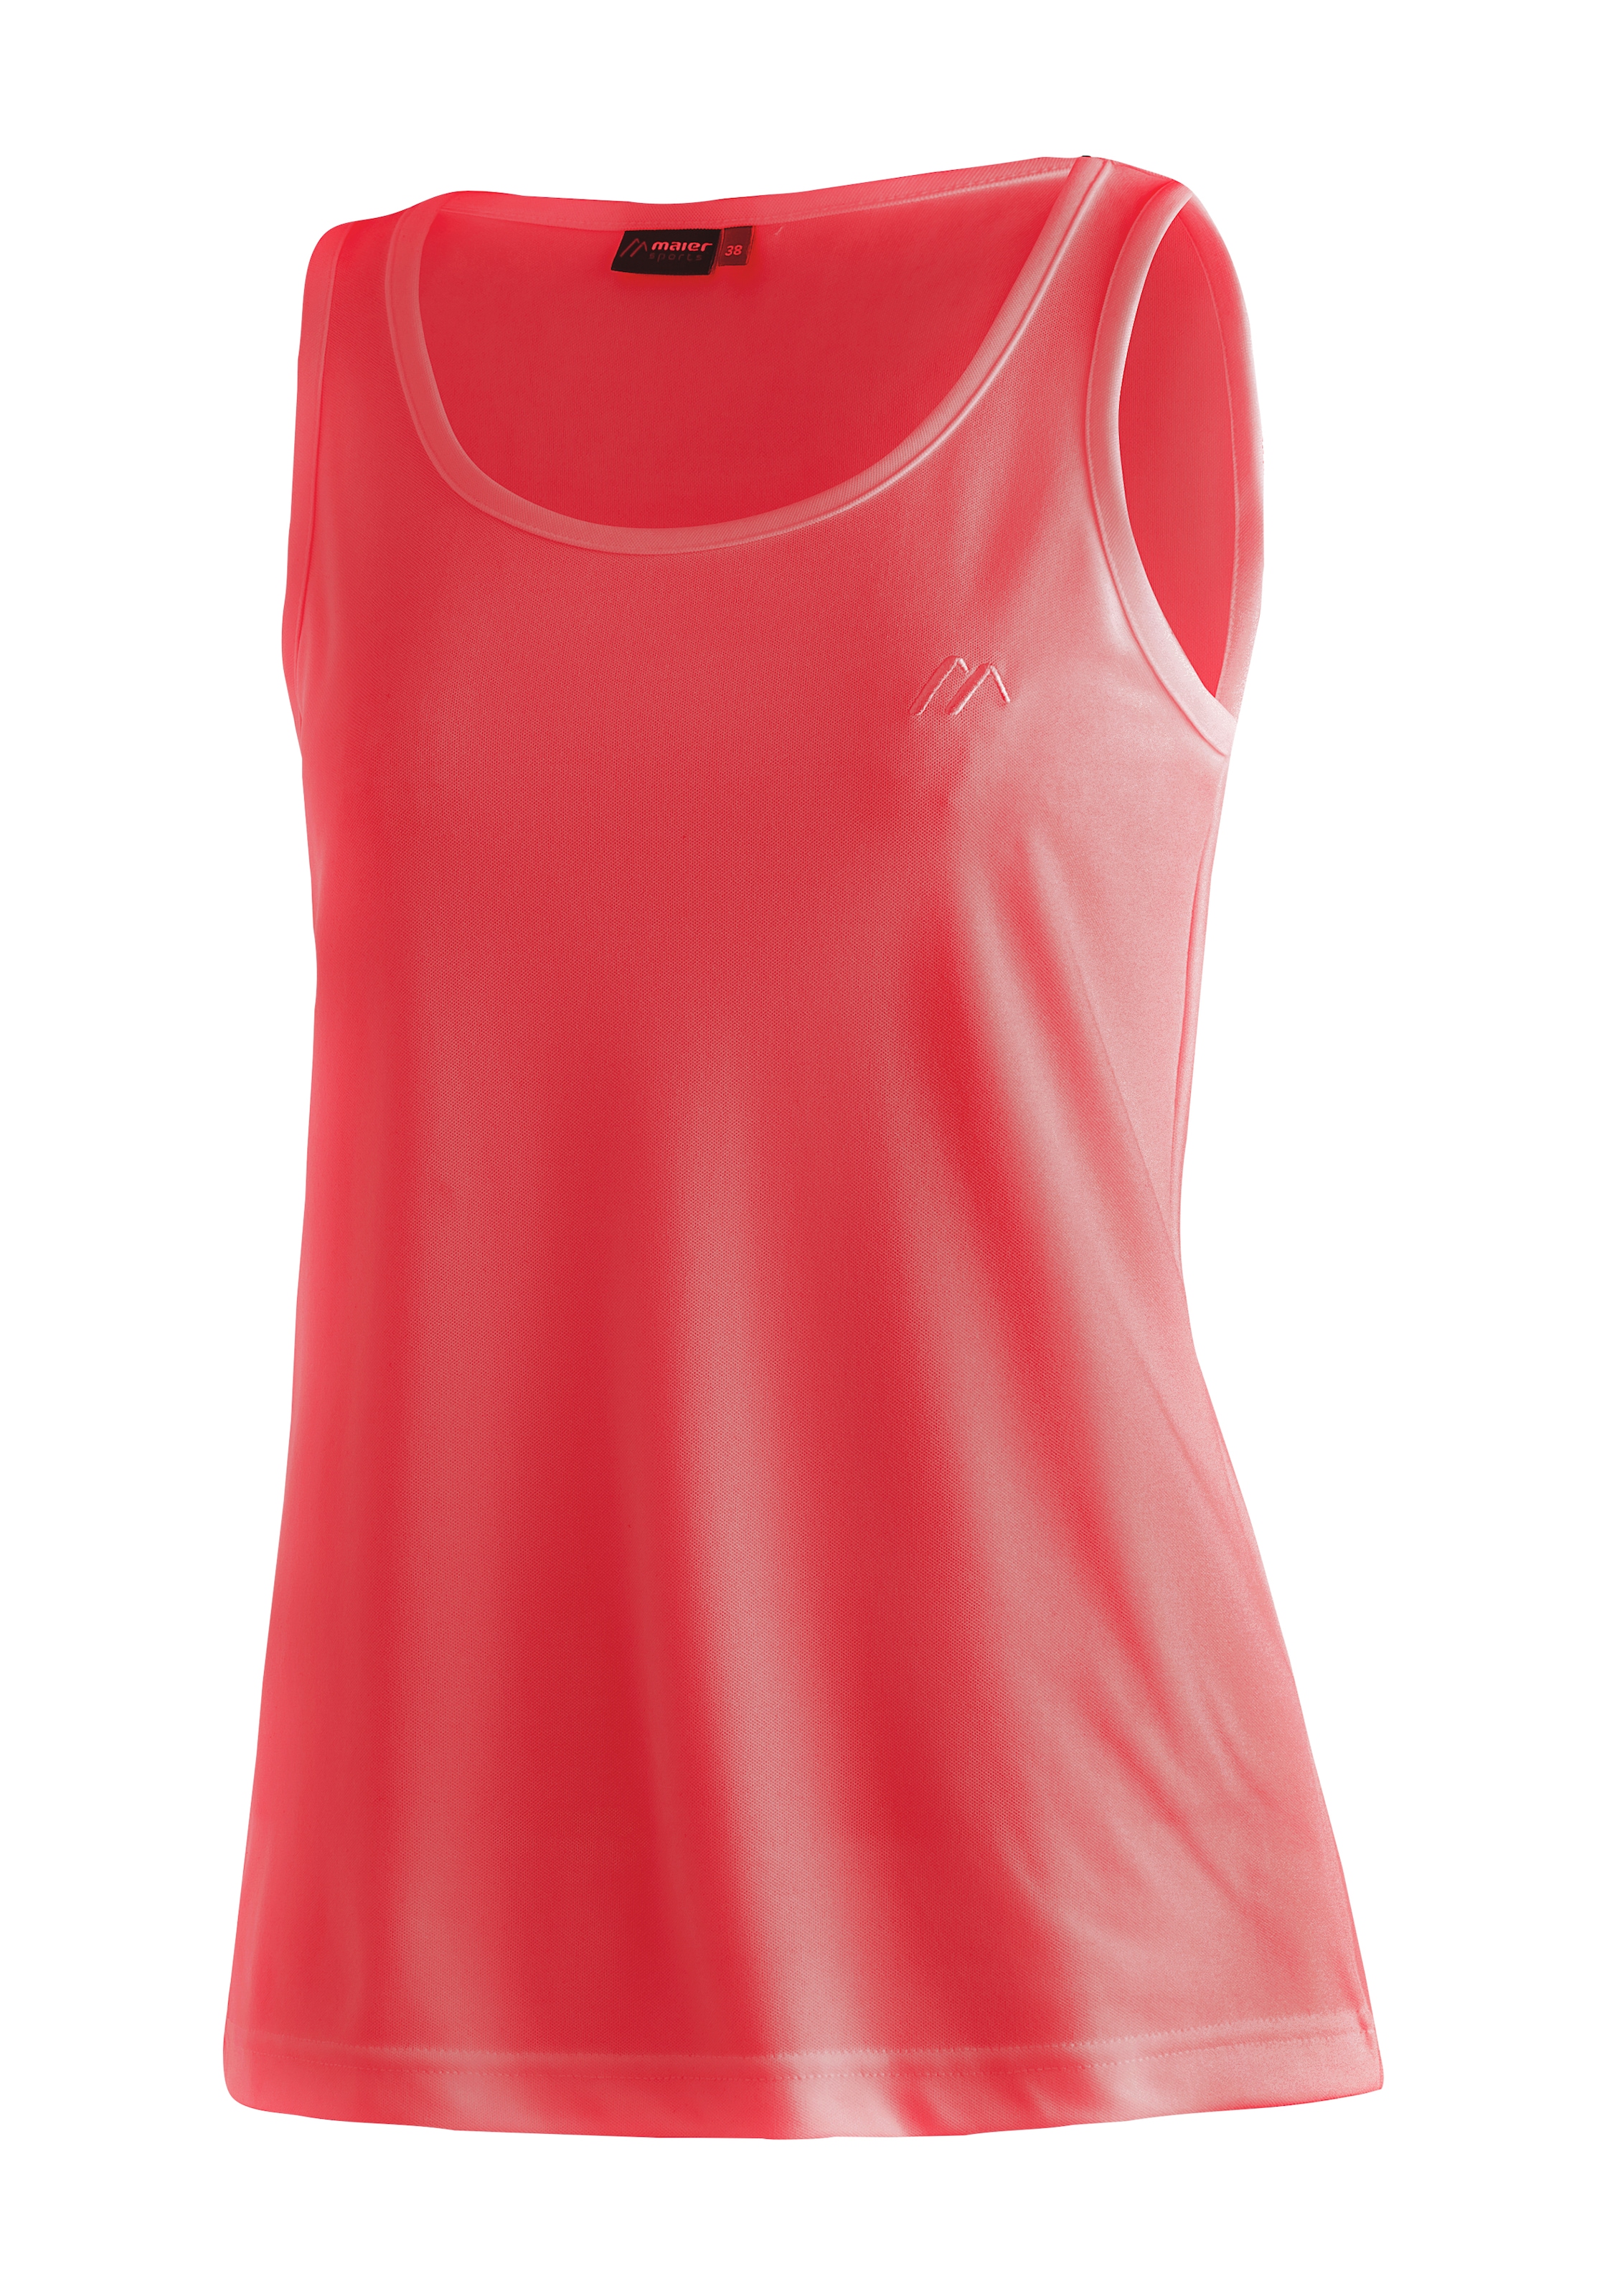 Tank-Top Shirt »Petra«, Funktionsshirt kaufen für Damen Outdoor- und Maier Sports Sport ärmelloses Aktivitäten,